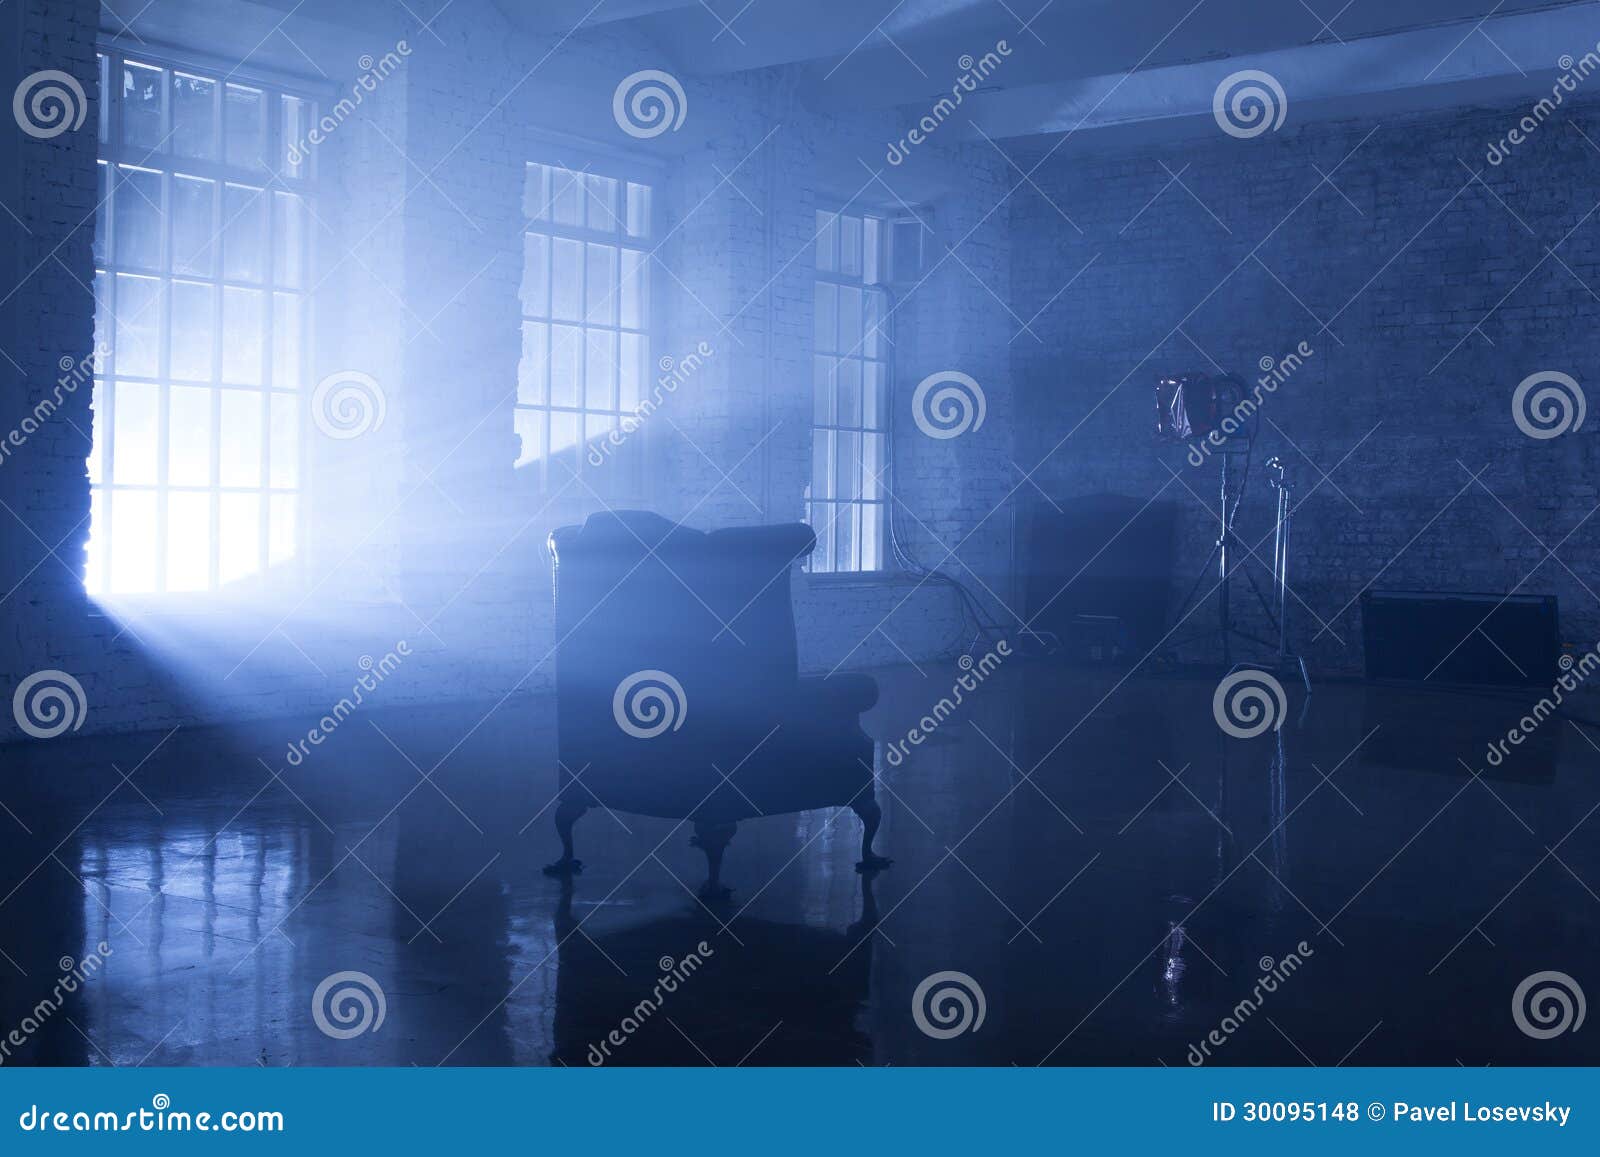 a seat in a blue backlight in studio